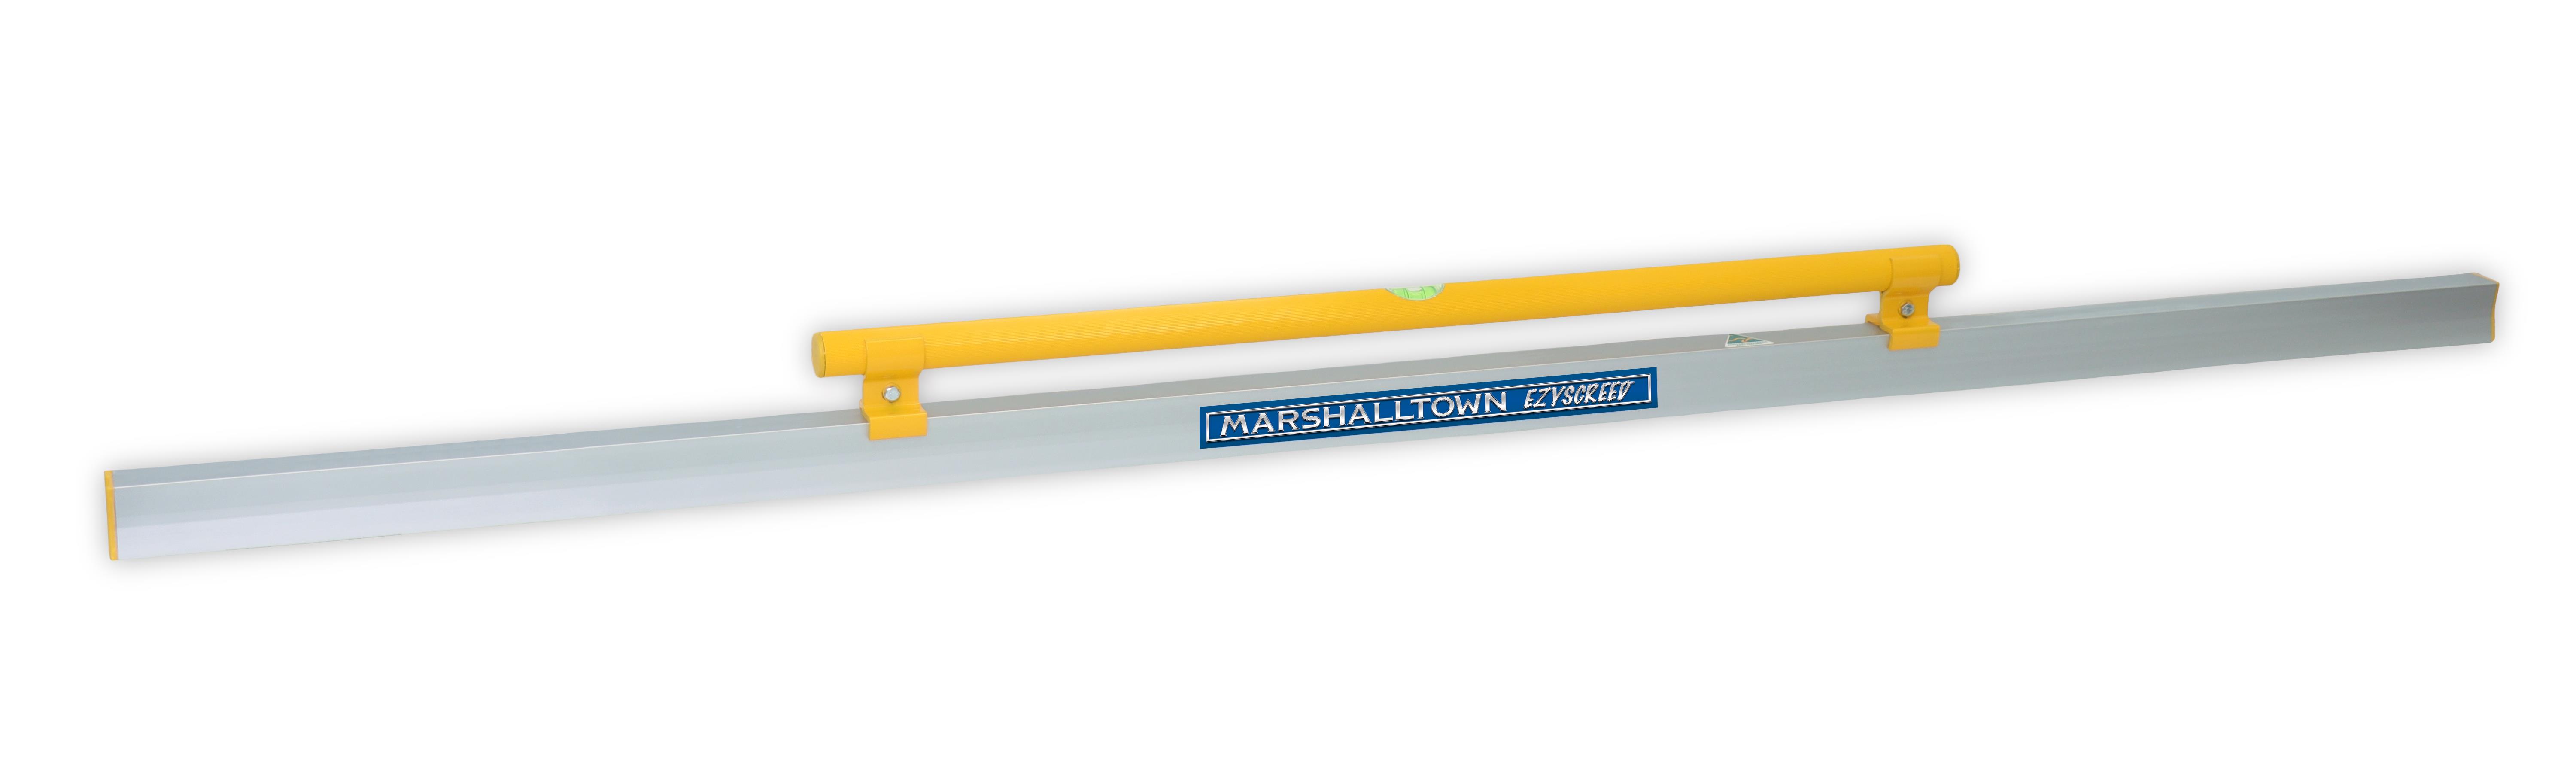 Marshalltown (28398) product